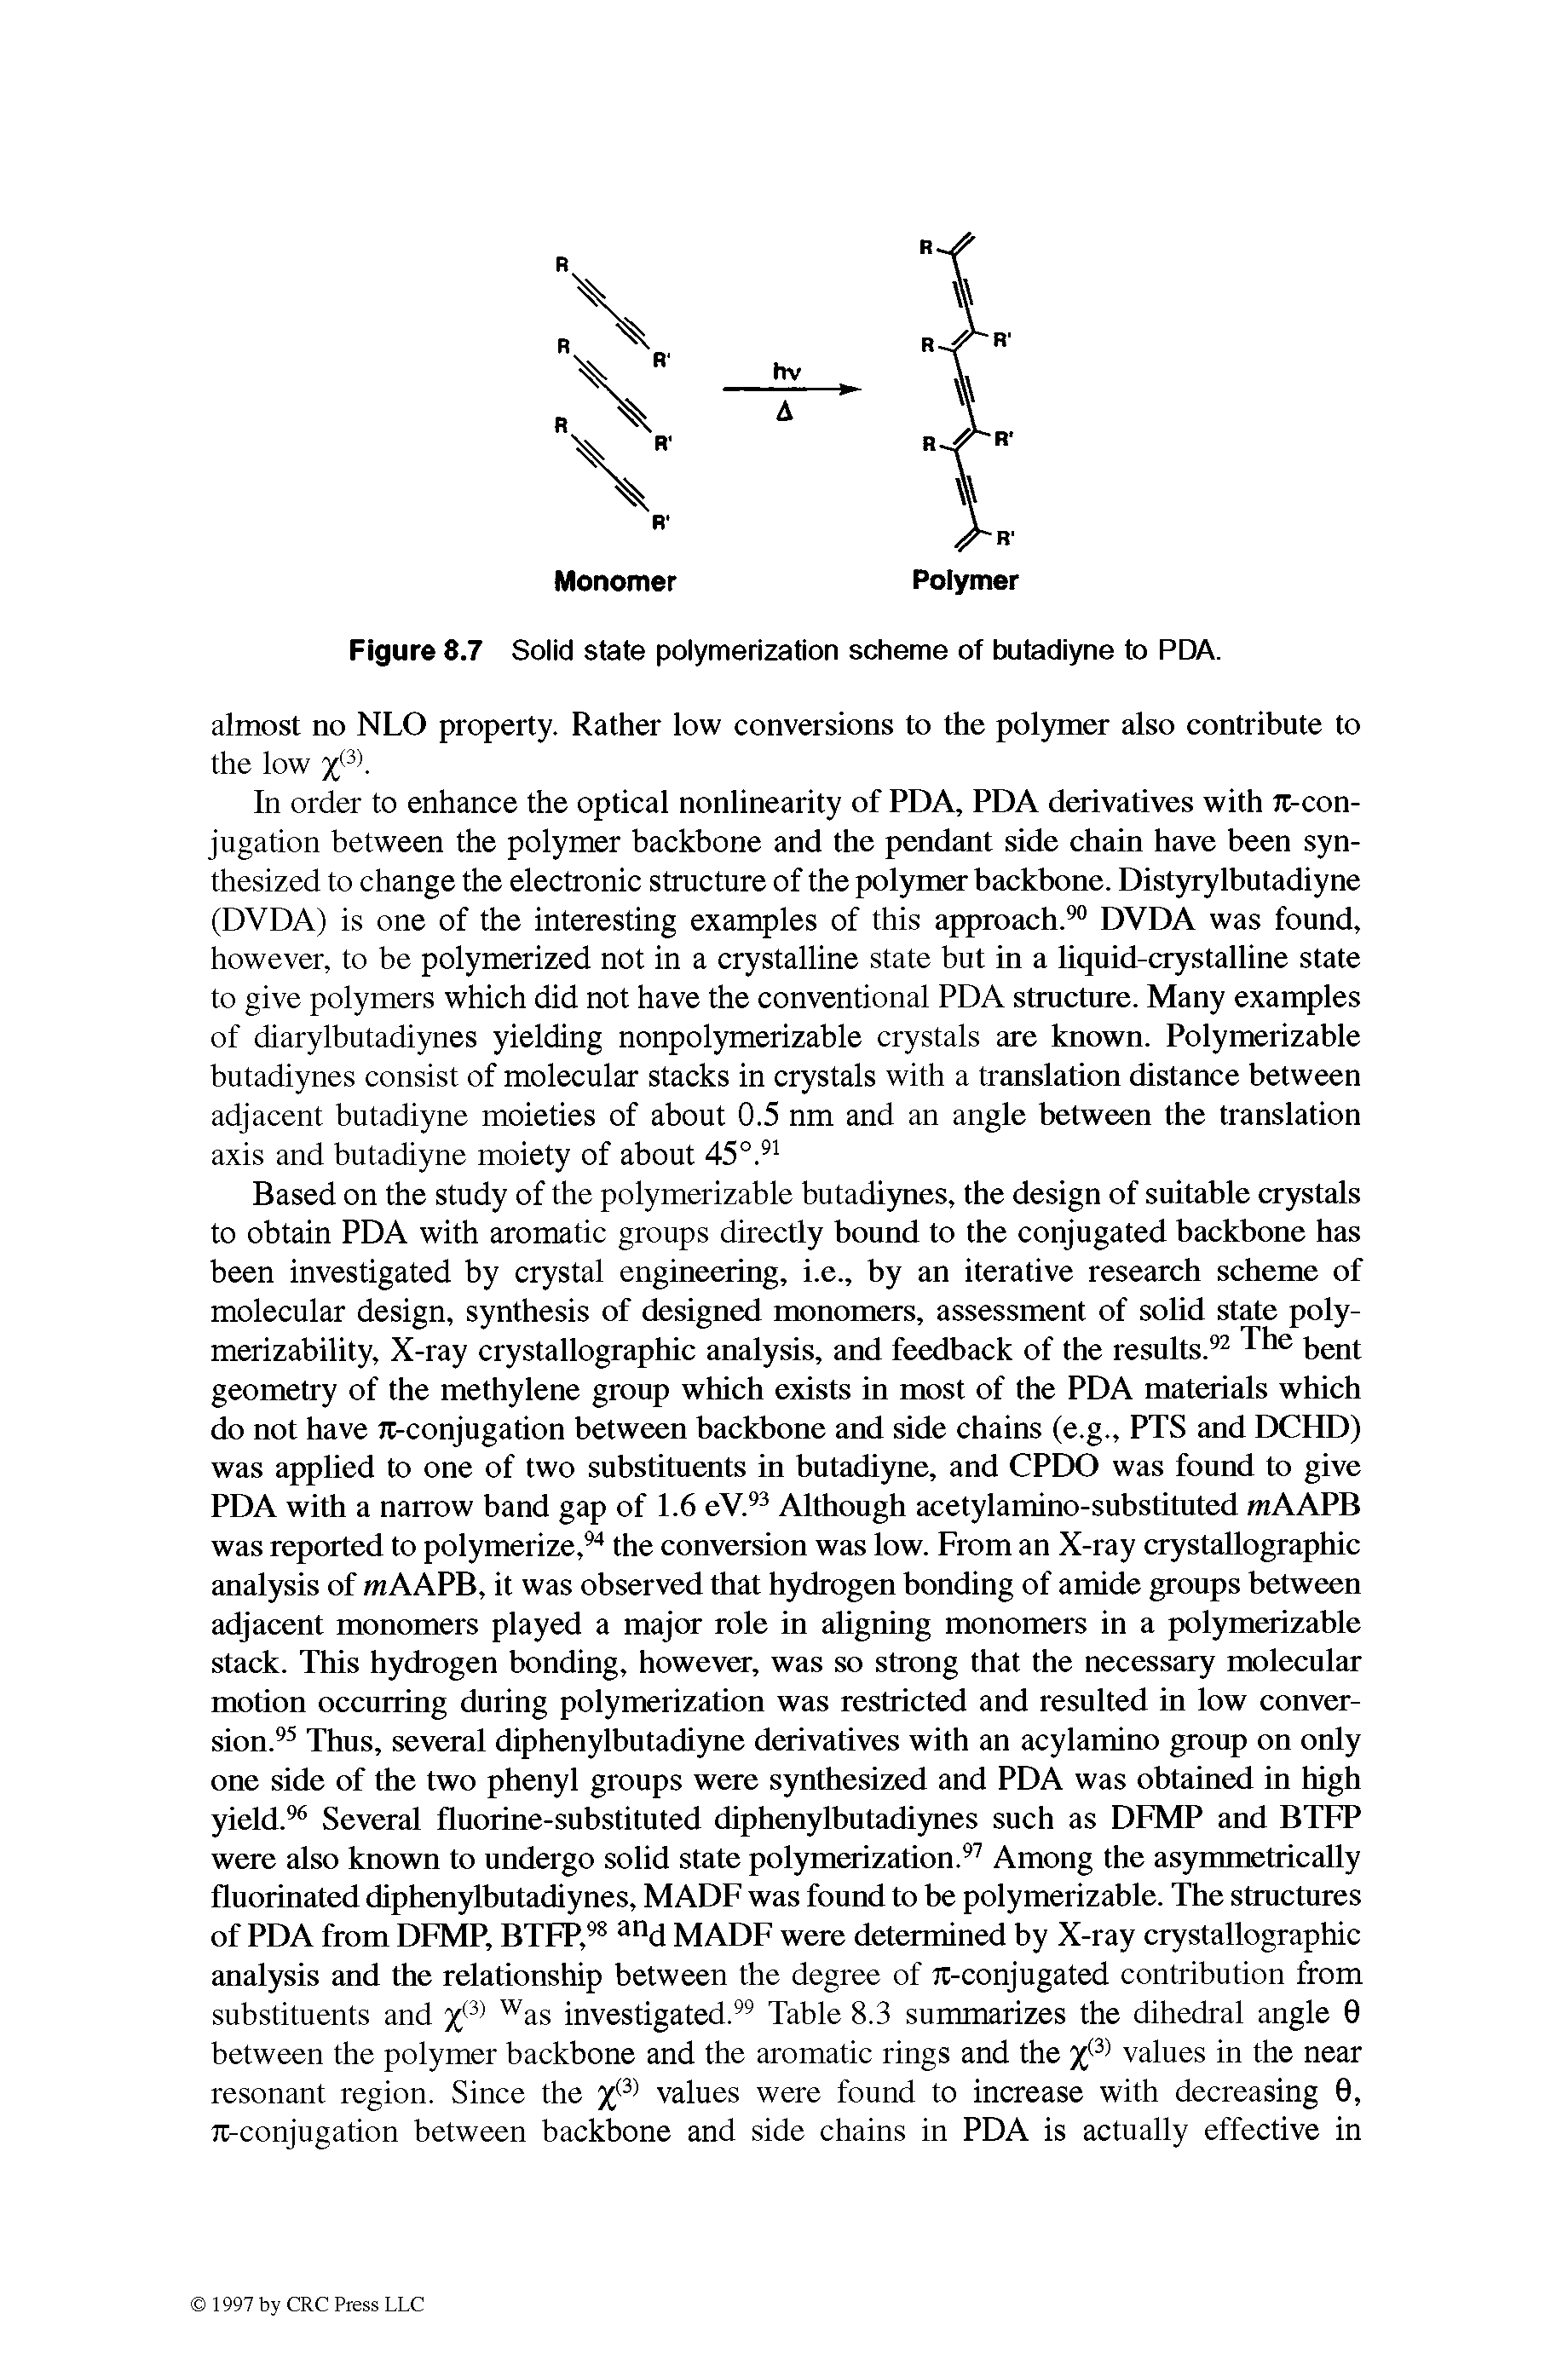 Figure 8.7 Solid state polymerization scheme of butadiyne to PDA.